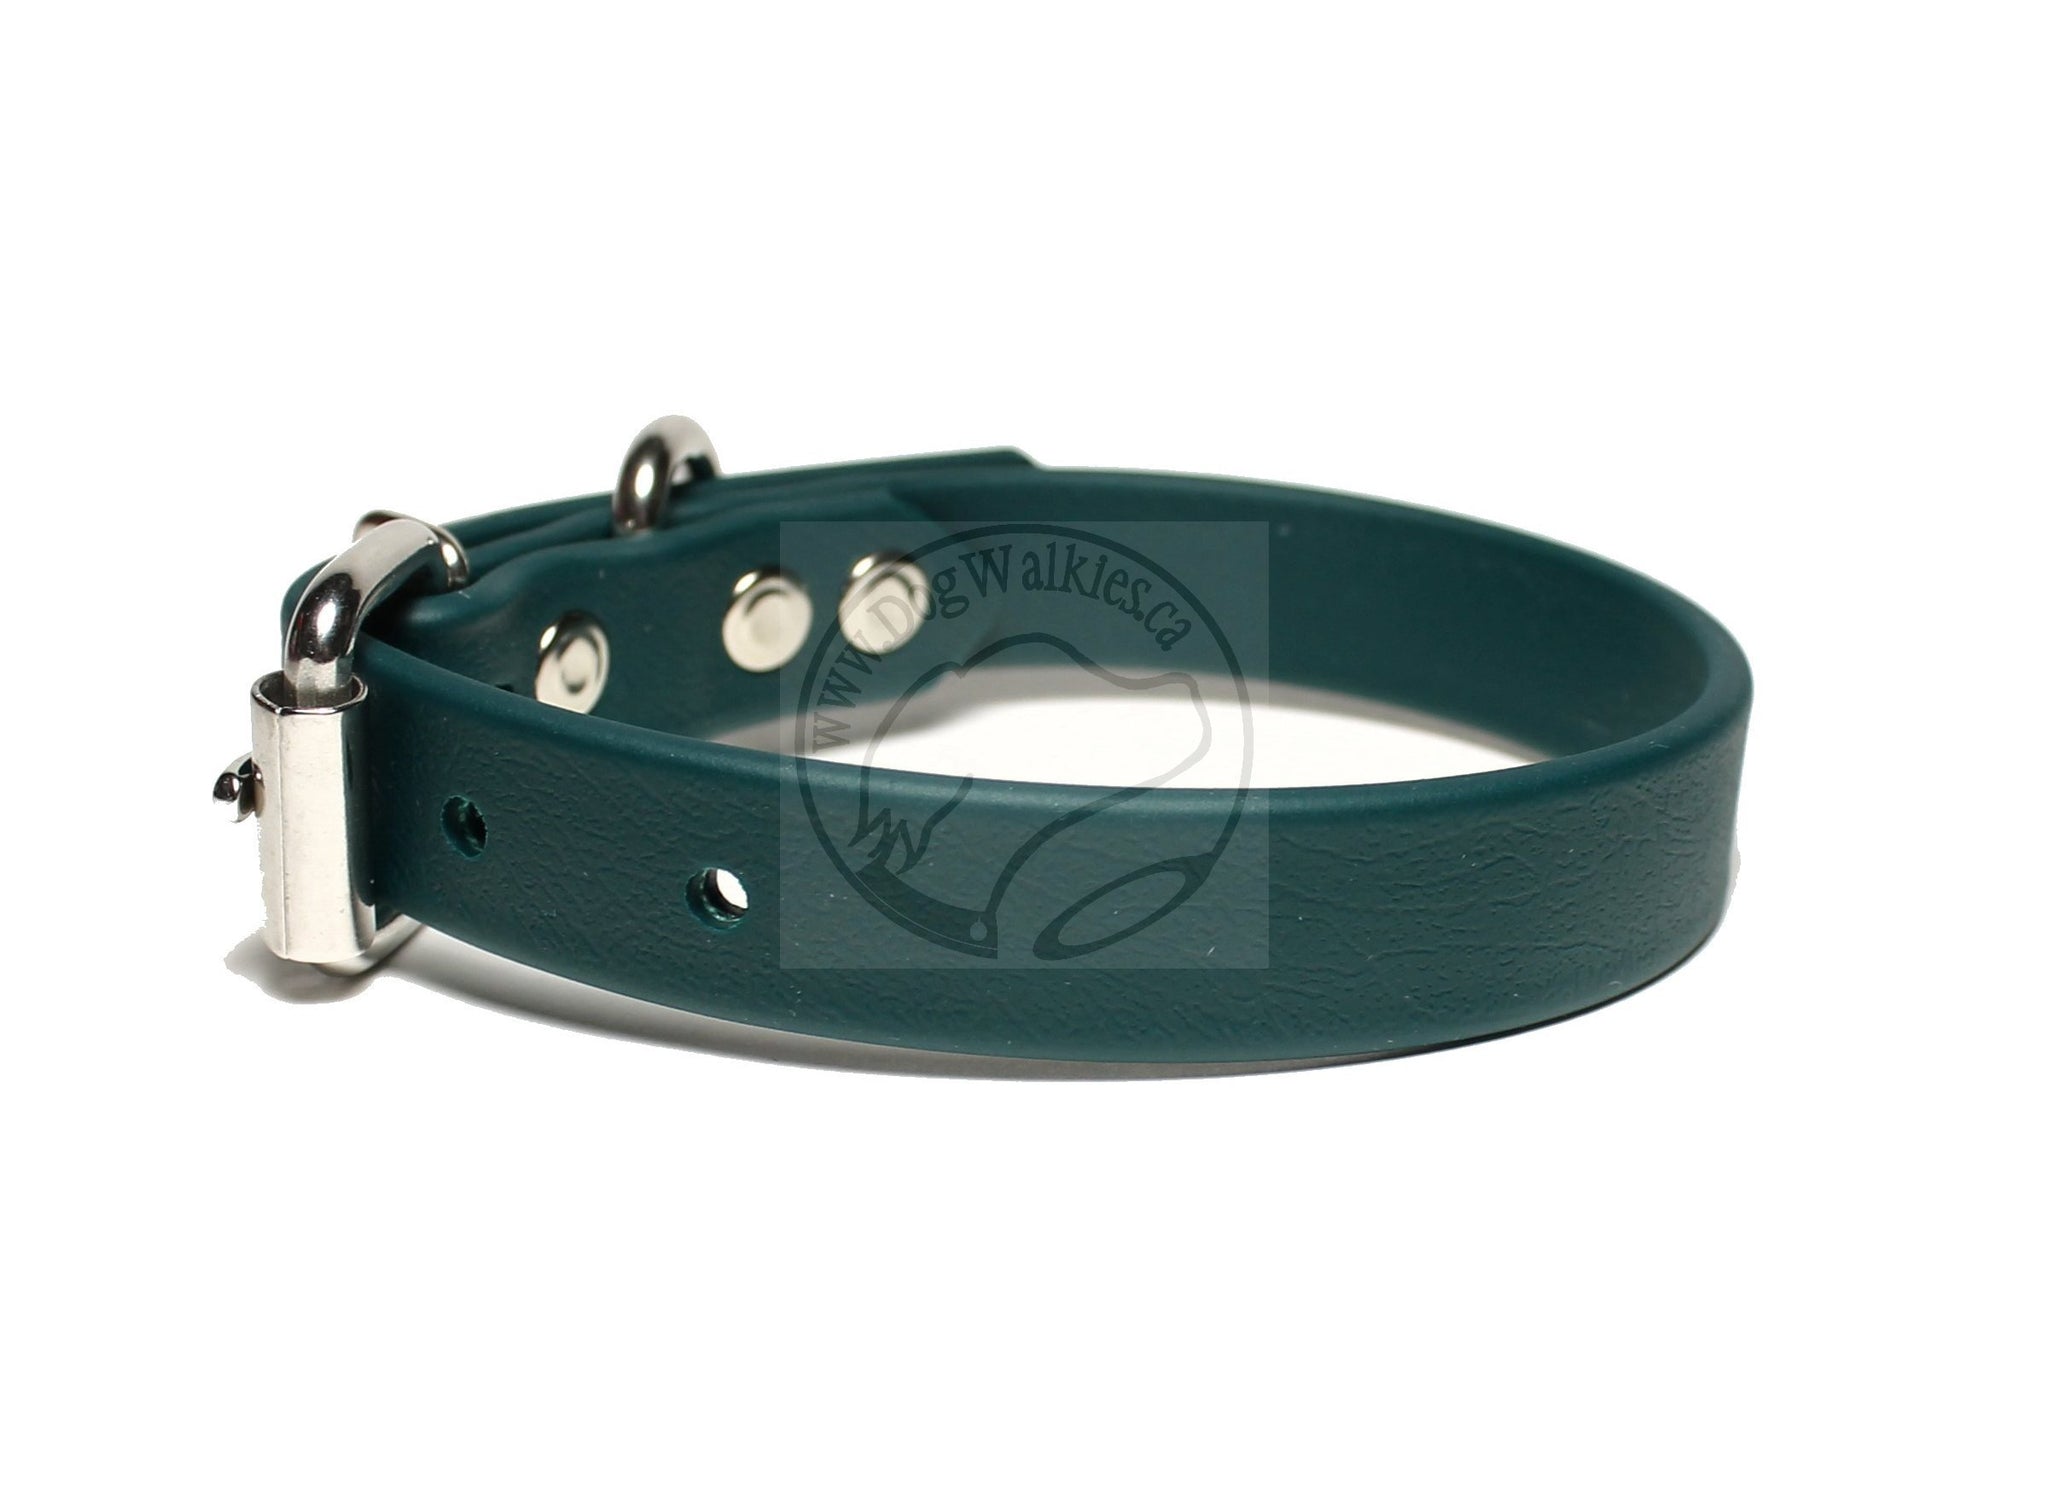 Pine Green Biothane Dog Collar - 3/4" (20mm) wide